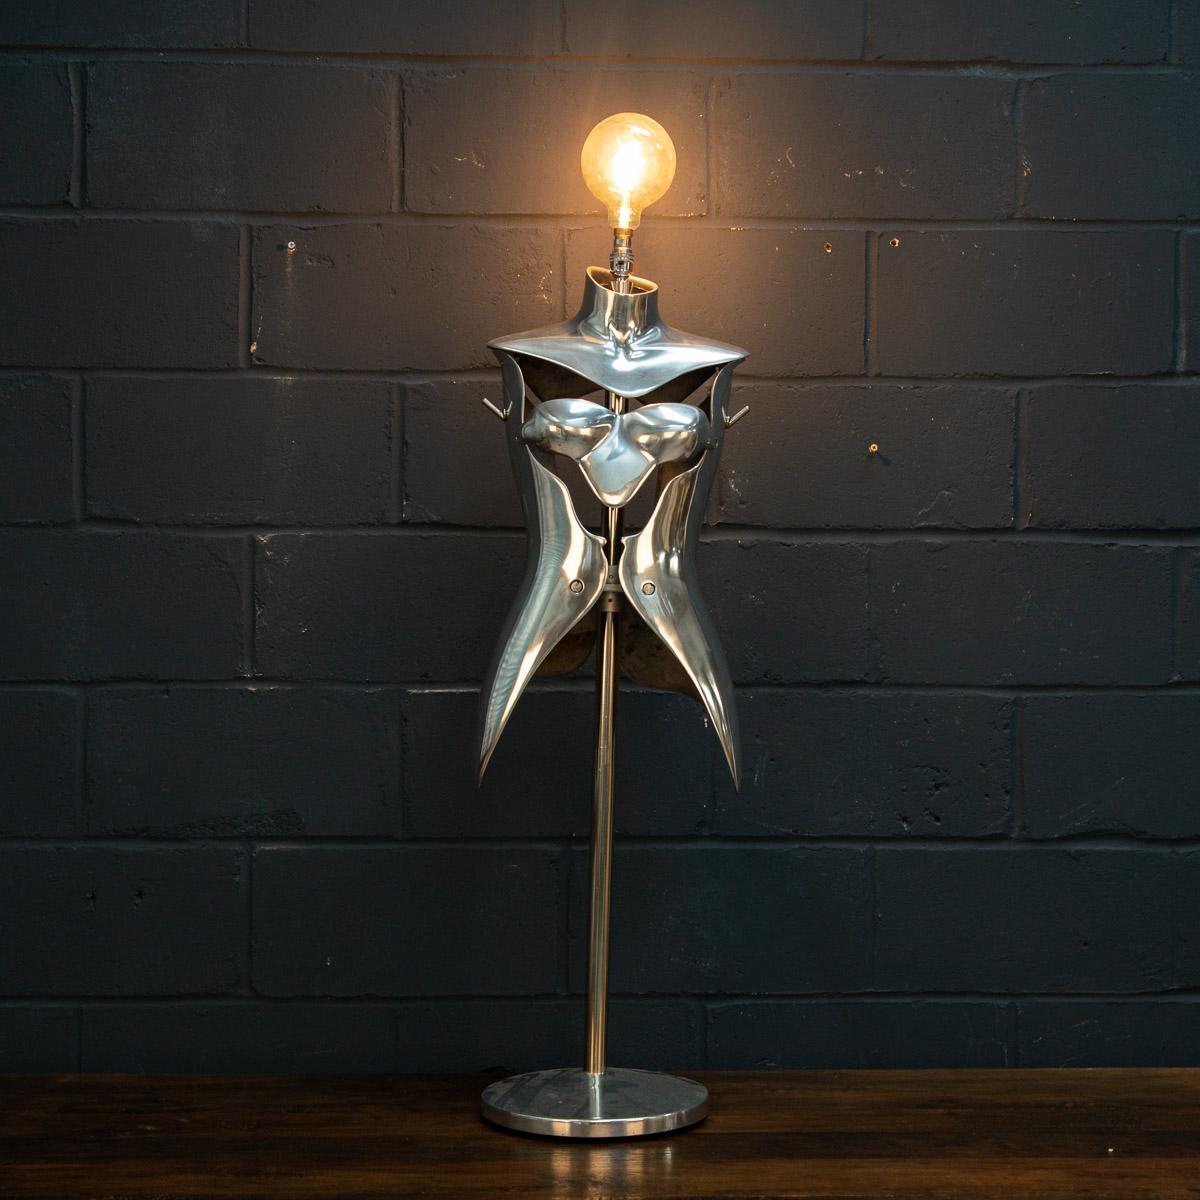 British Stylish Mannequin Table Lamp by Nigel Coates, For Jigsaw, Knightsbridge, c.1990